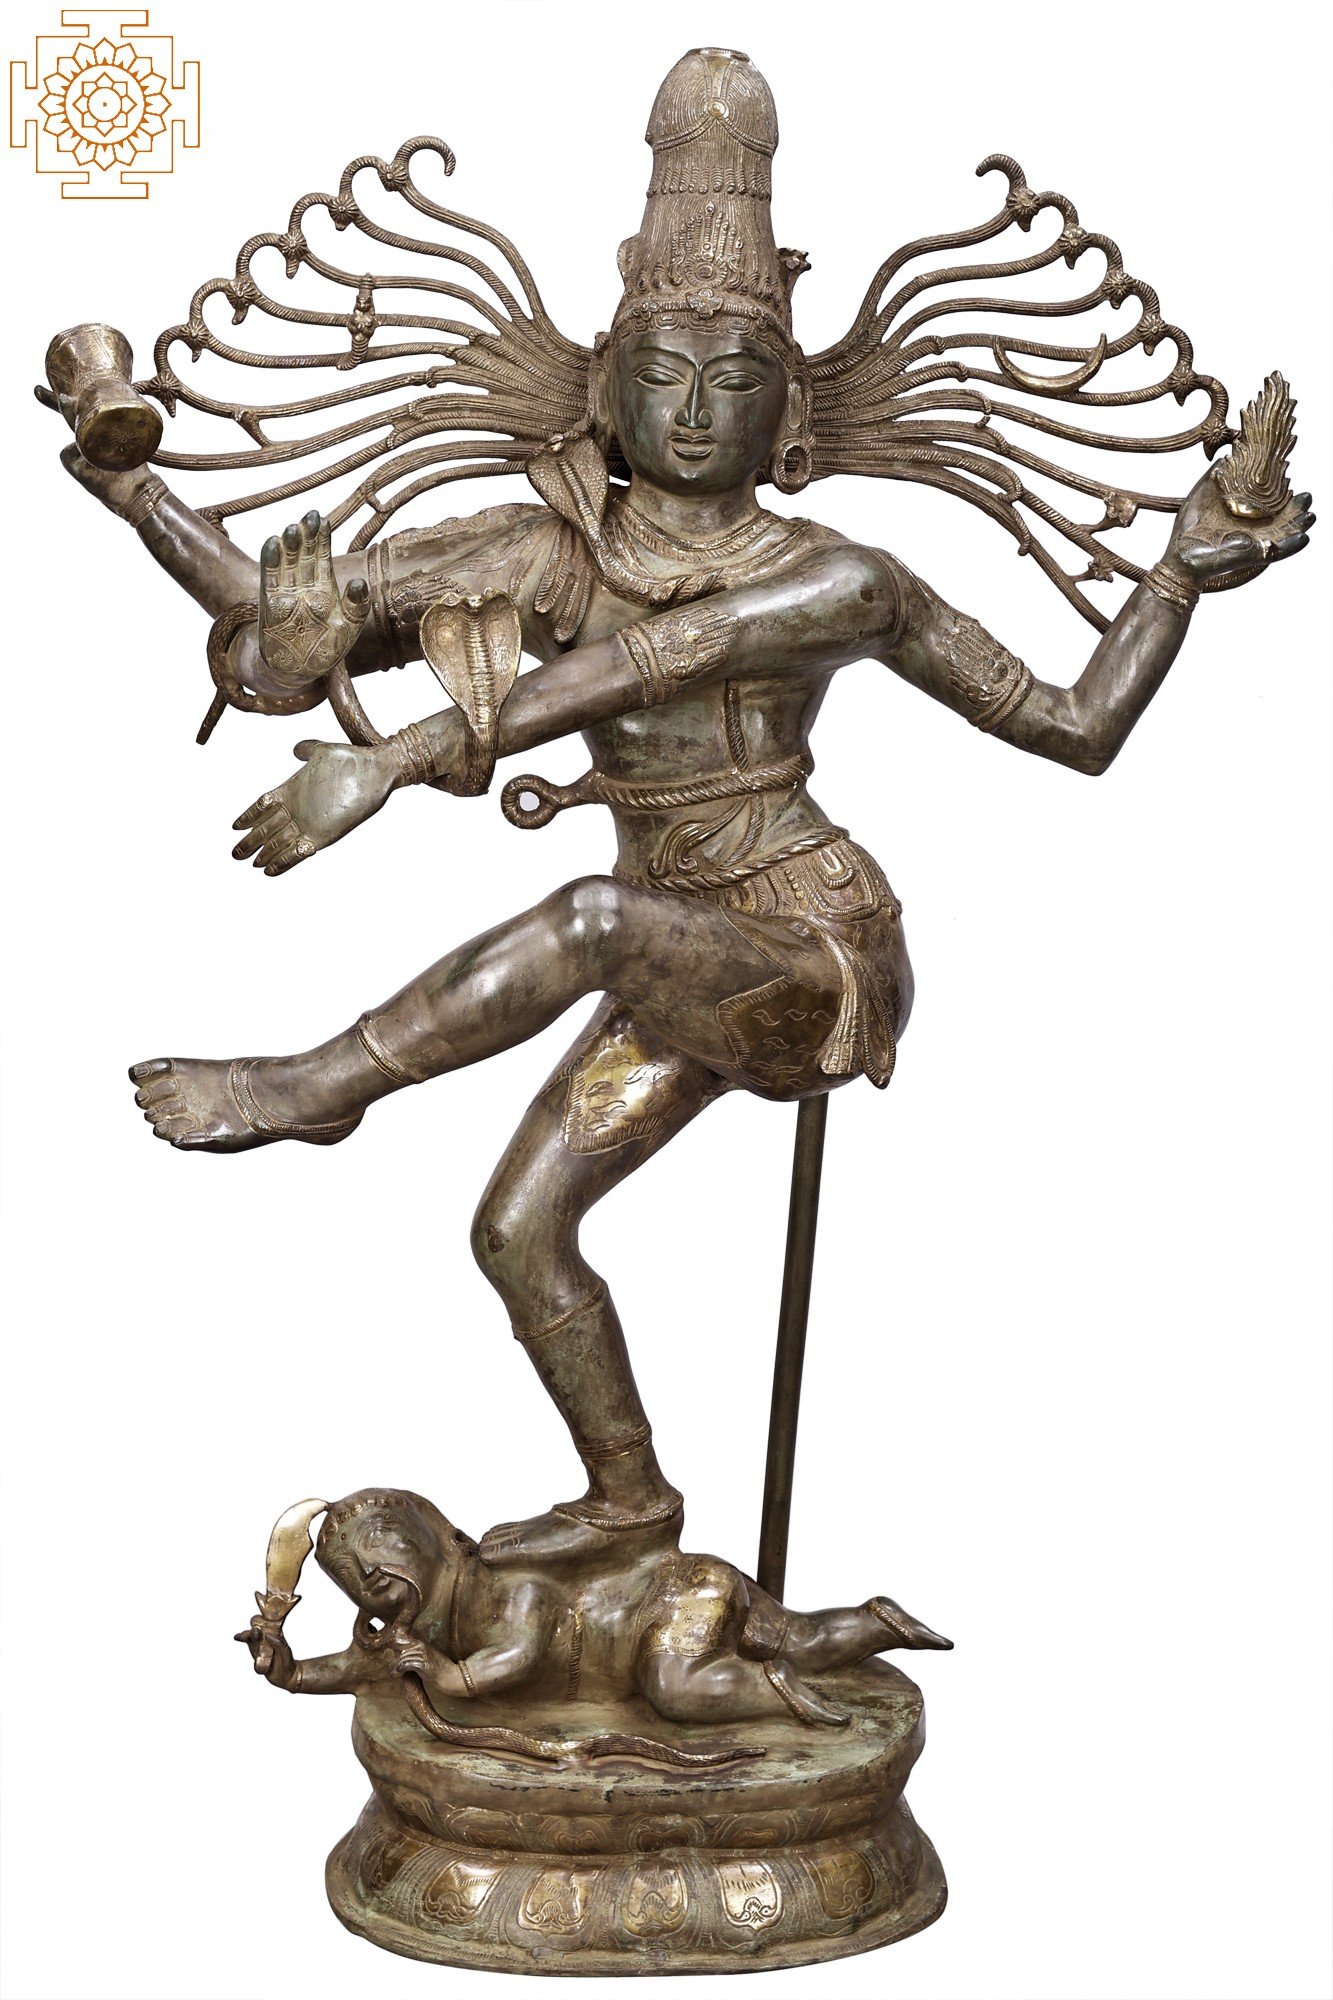 57 Dancing Shiva Nataraja Large Shiva Tandava Lord Of The Dance Brass Statue Handmade